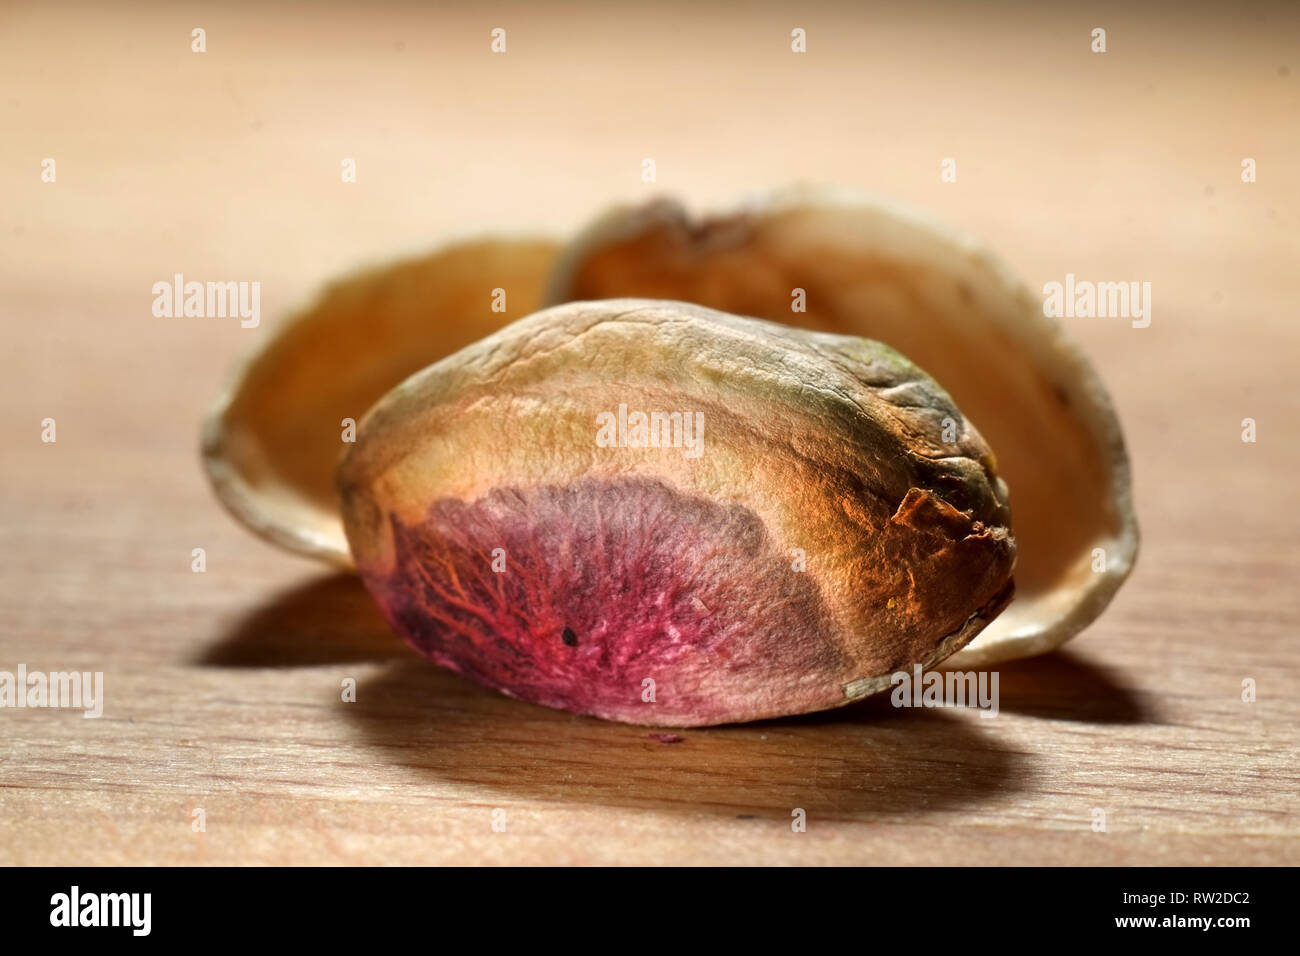 Pistachio nut close up. Stock Photo